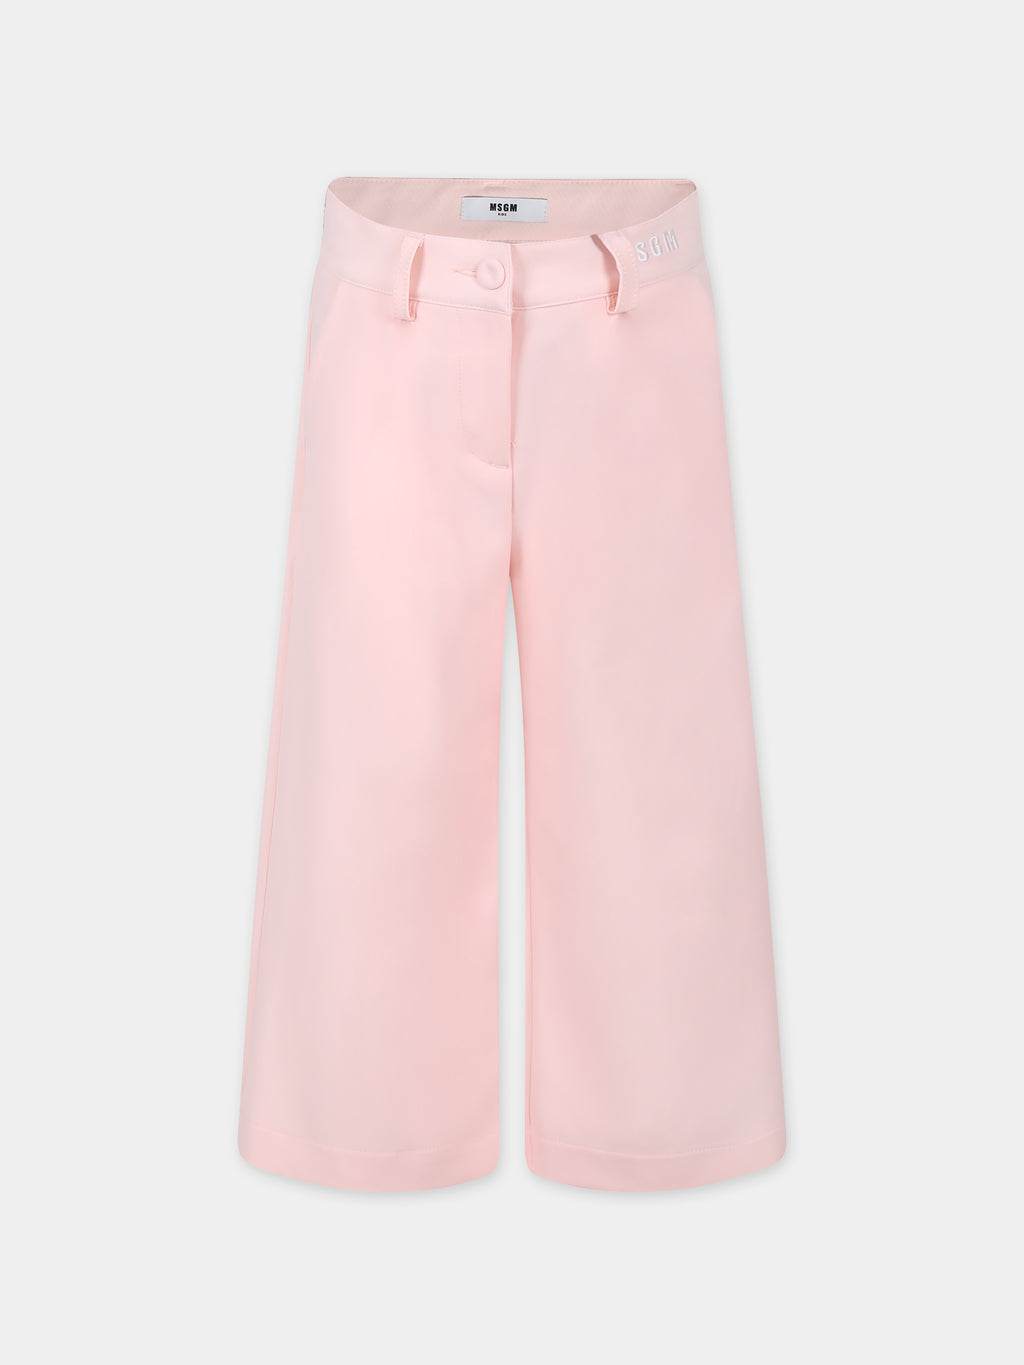 Pantaloni rosa per bambina con logo